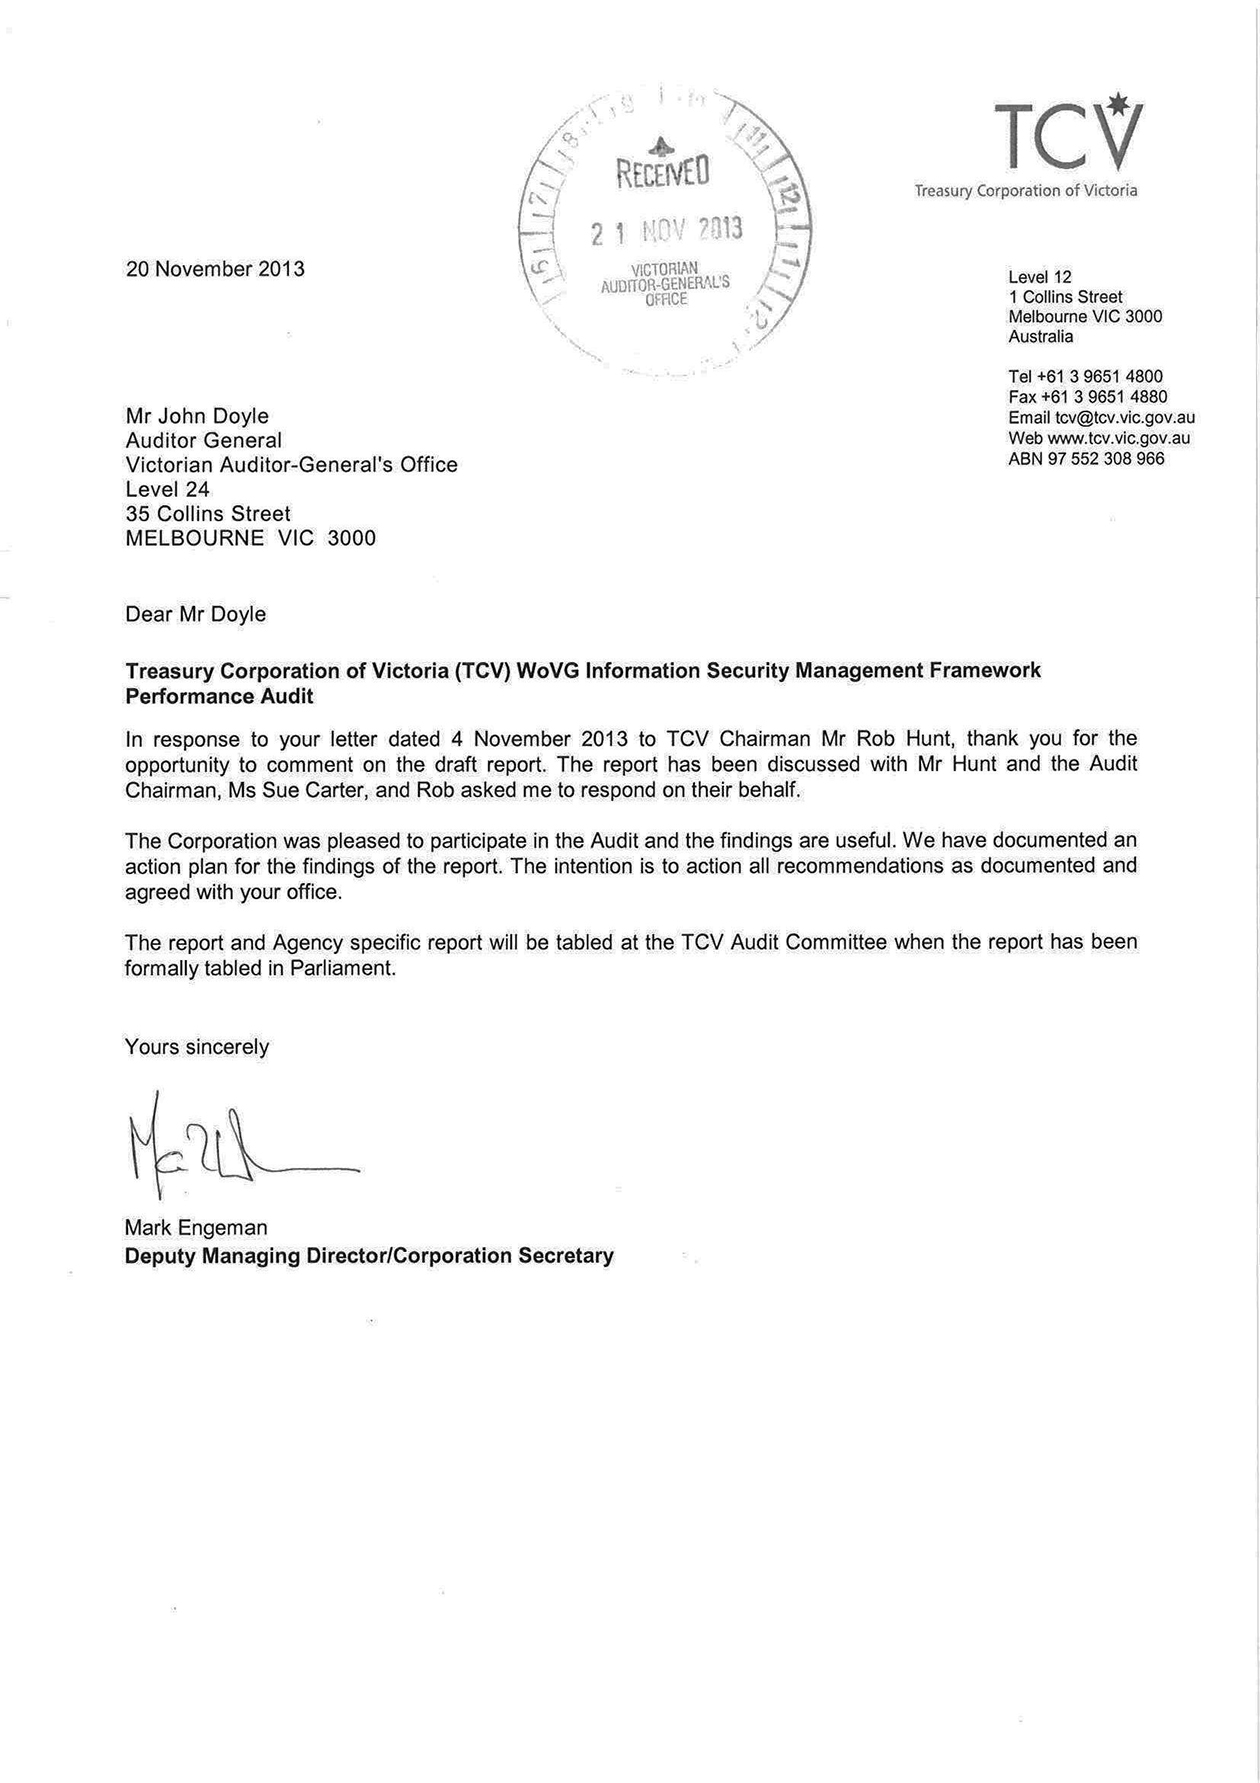 RESPONSE provided by the Deputy Managing Director/Corporation Secretary, Treasury Corporation of Victoria